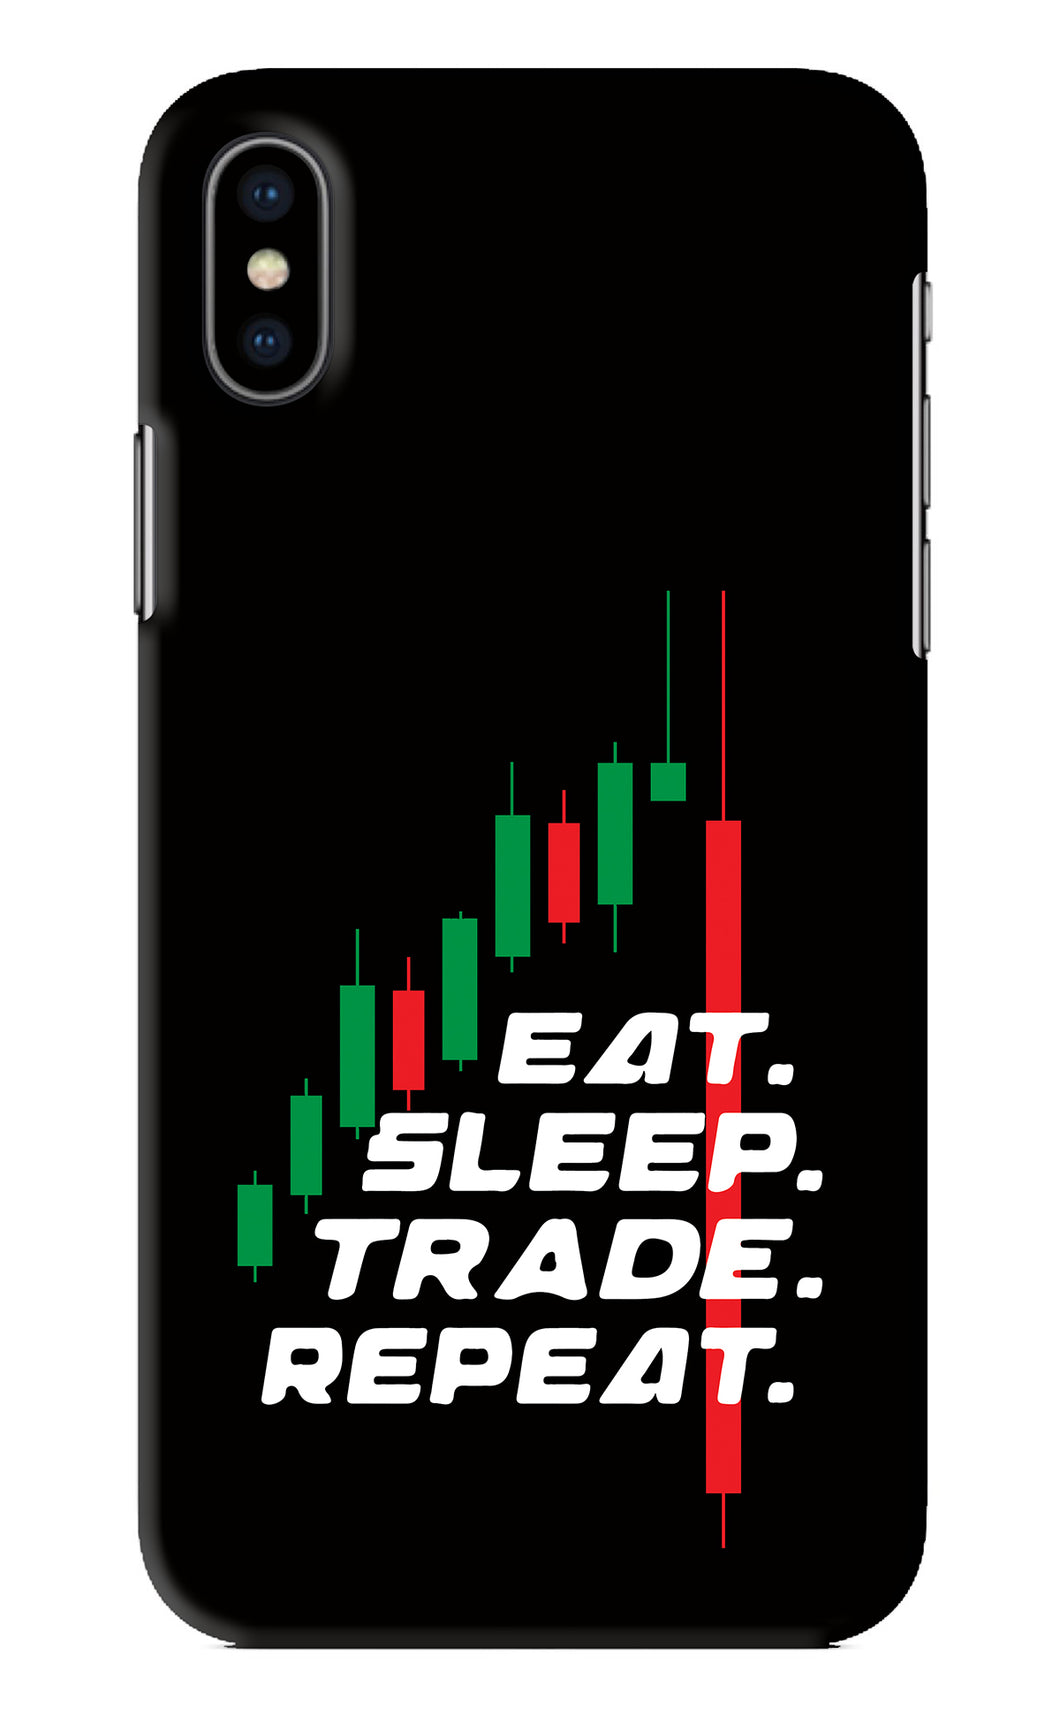 Eat Sleep Trade Repeat iPhone X Back Skin Wrap